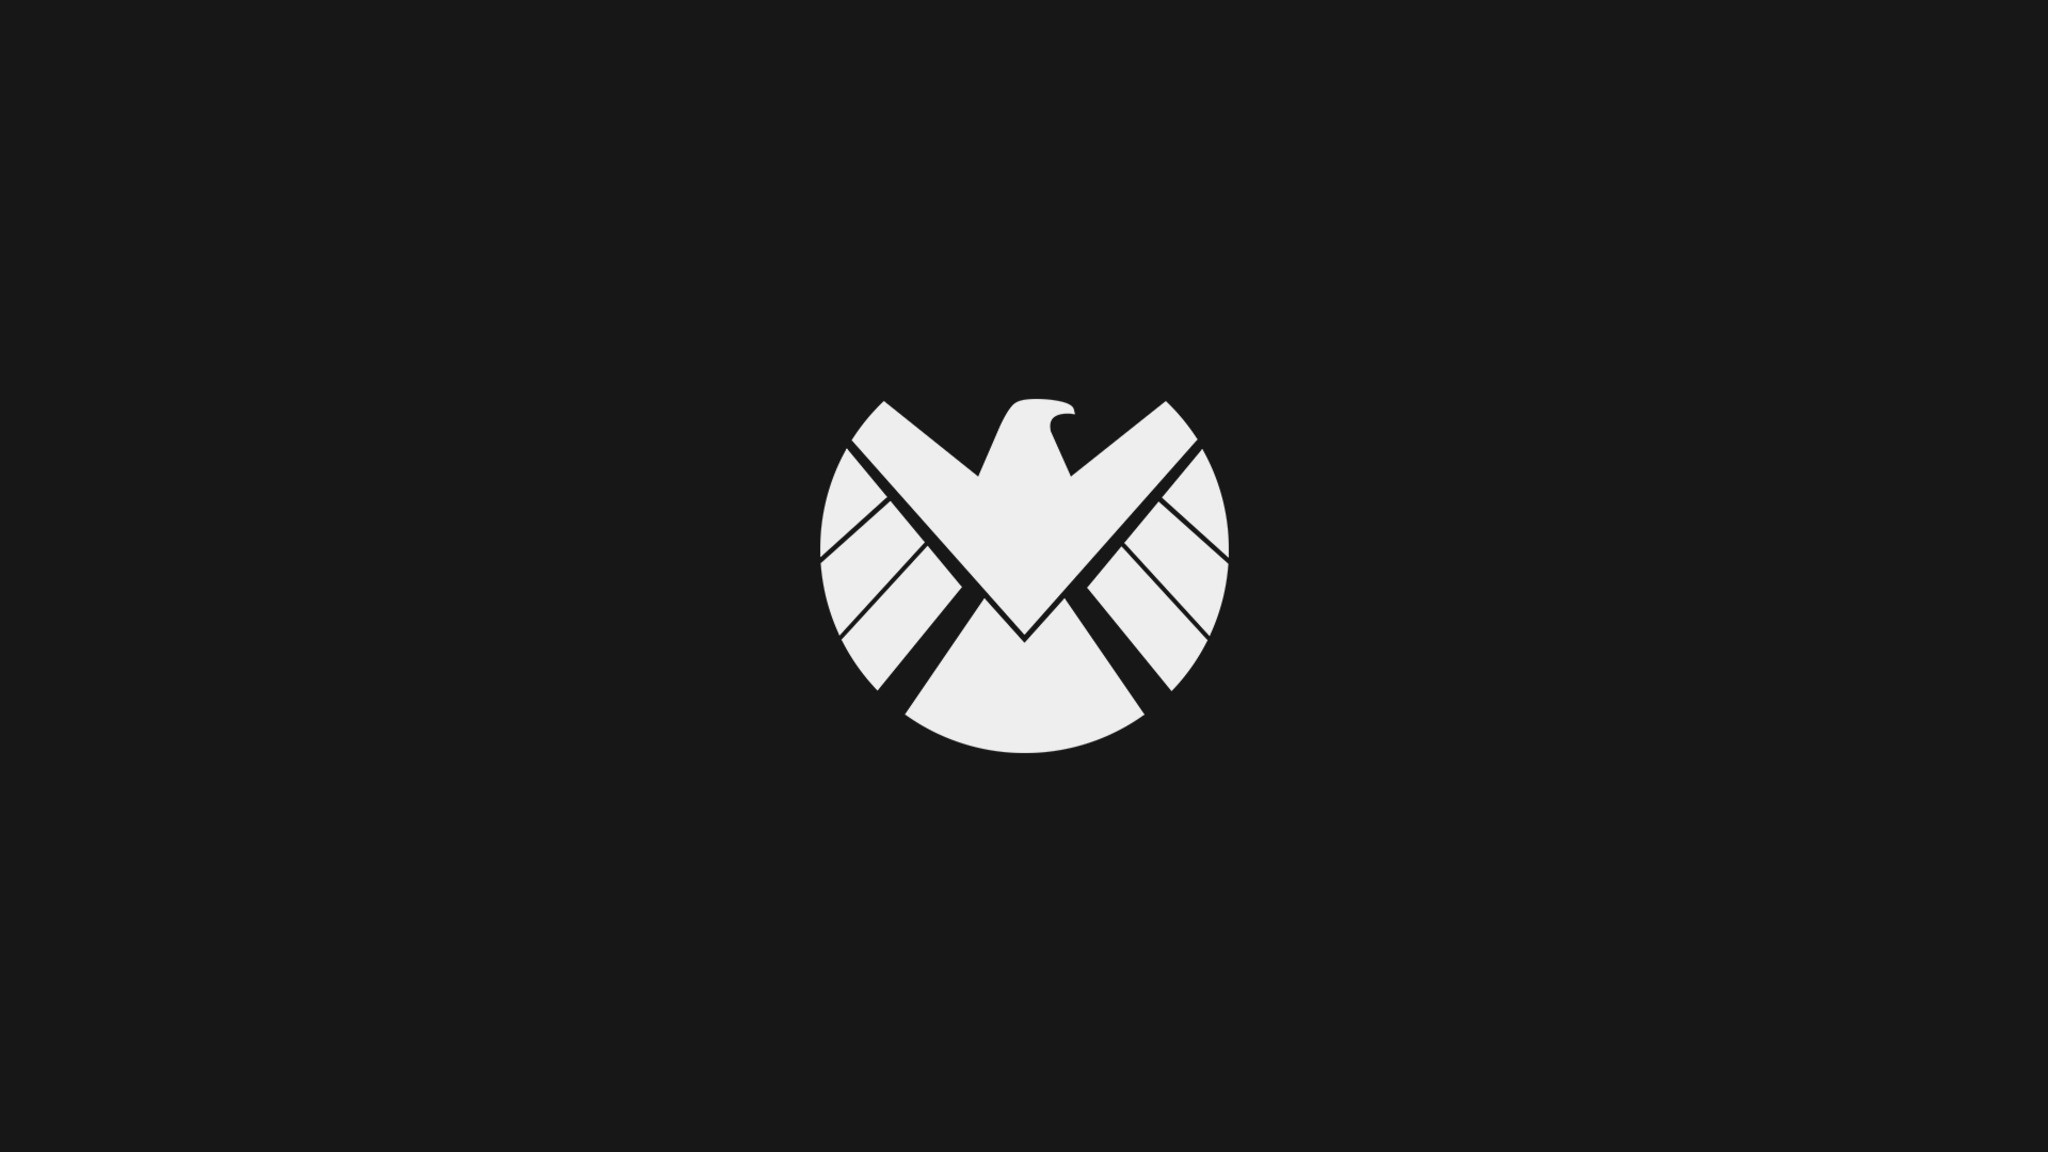 agents-of-shield-logo.jpg